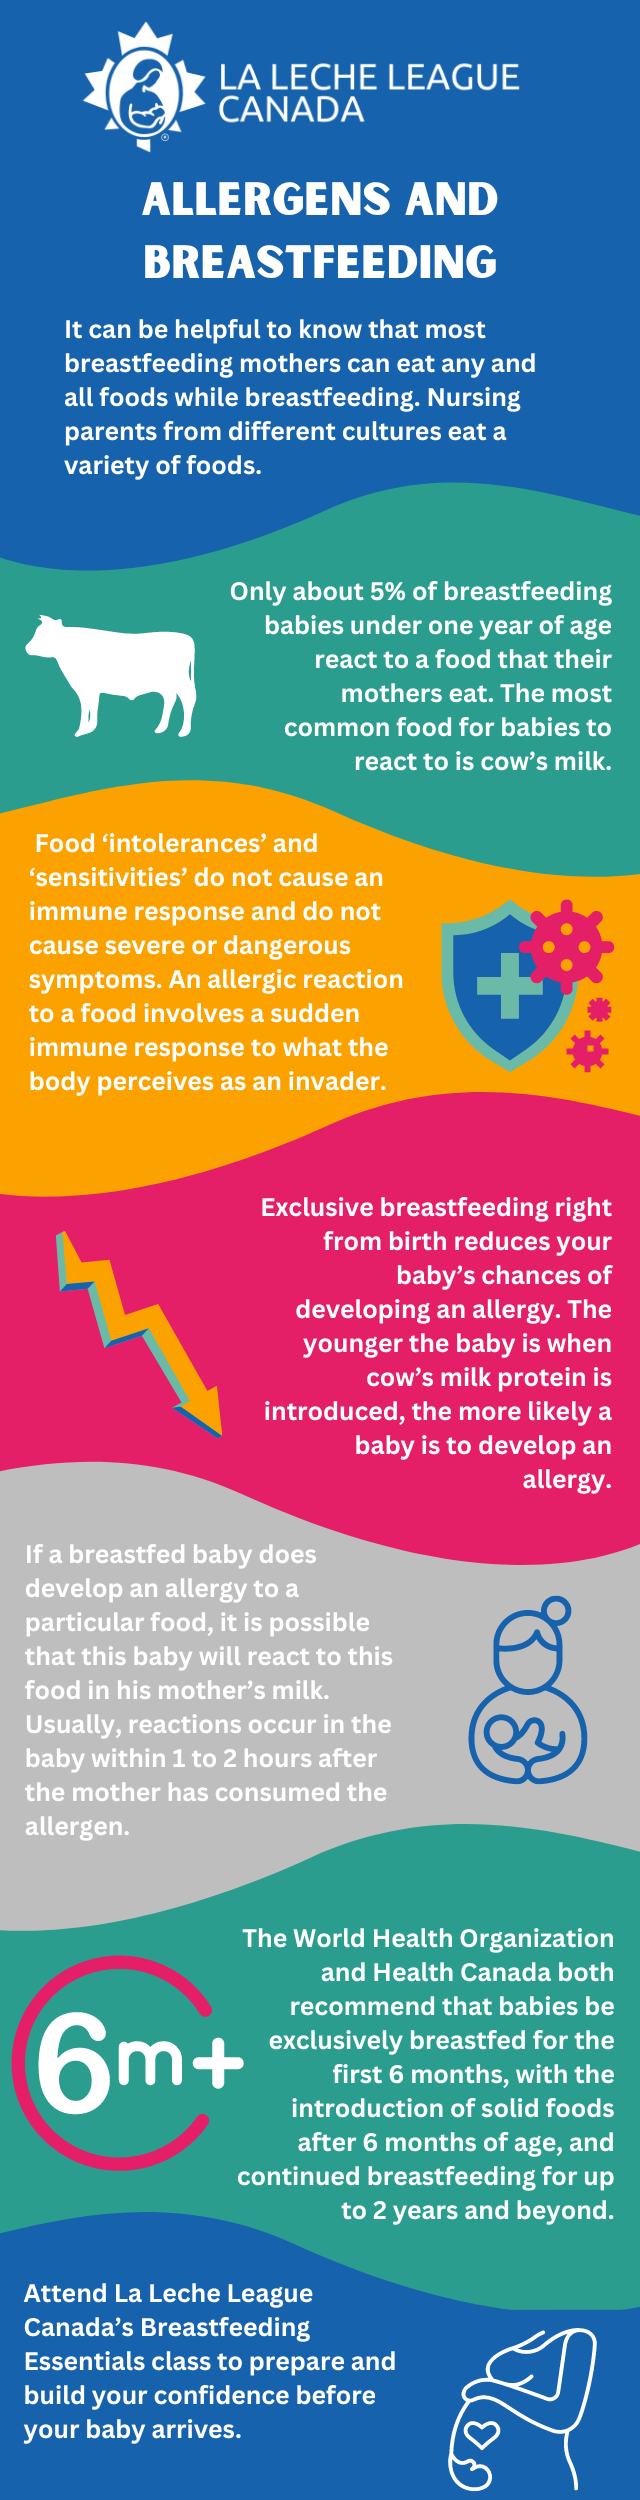 Allergies and Breastfeeding